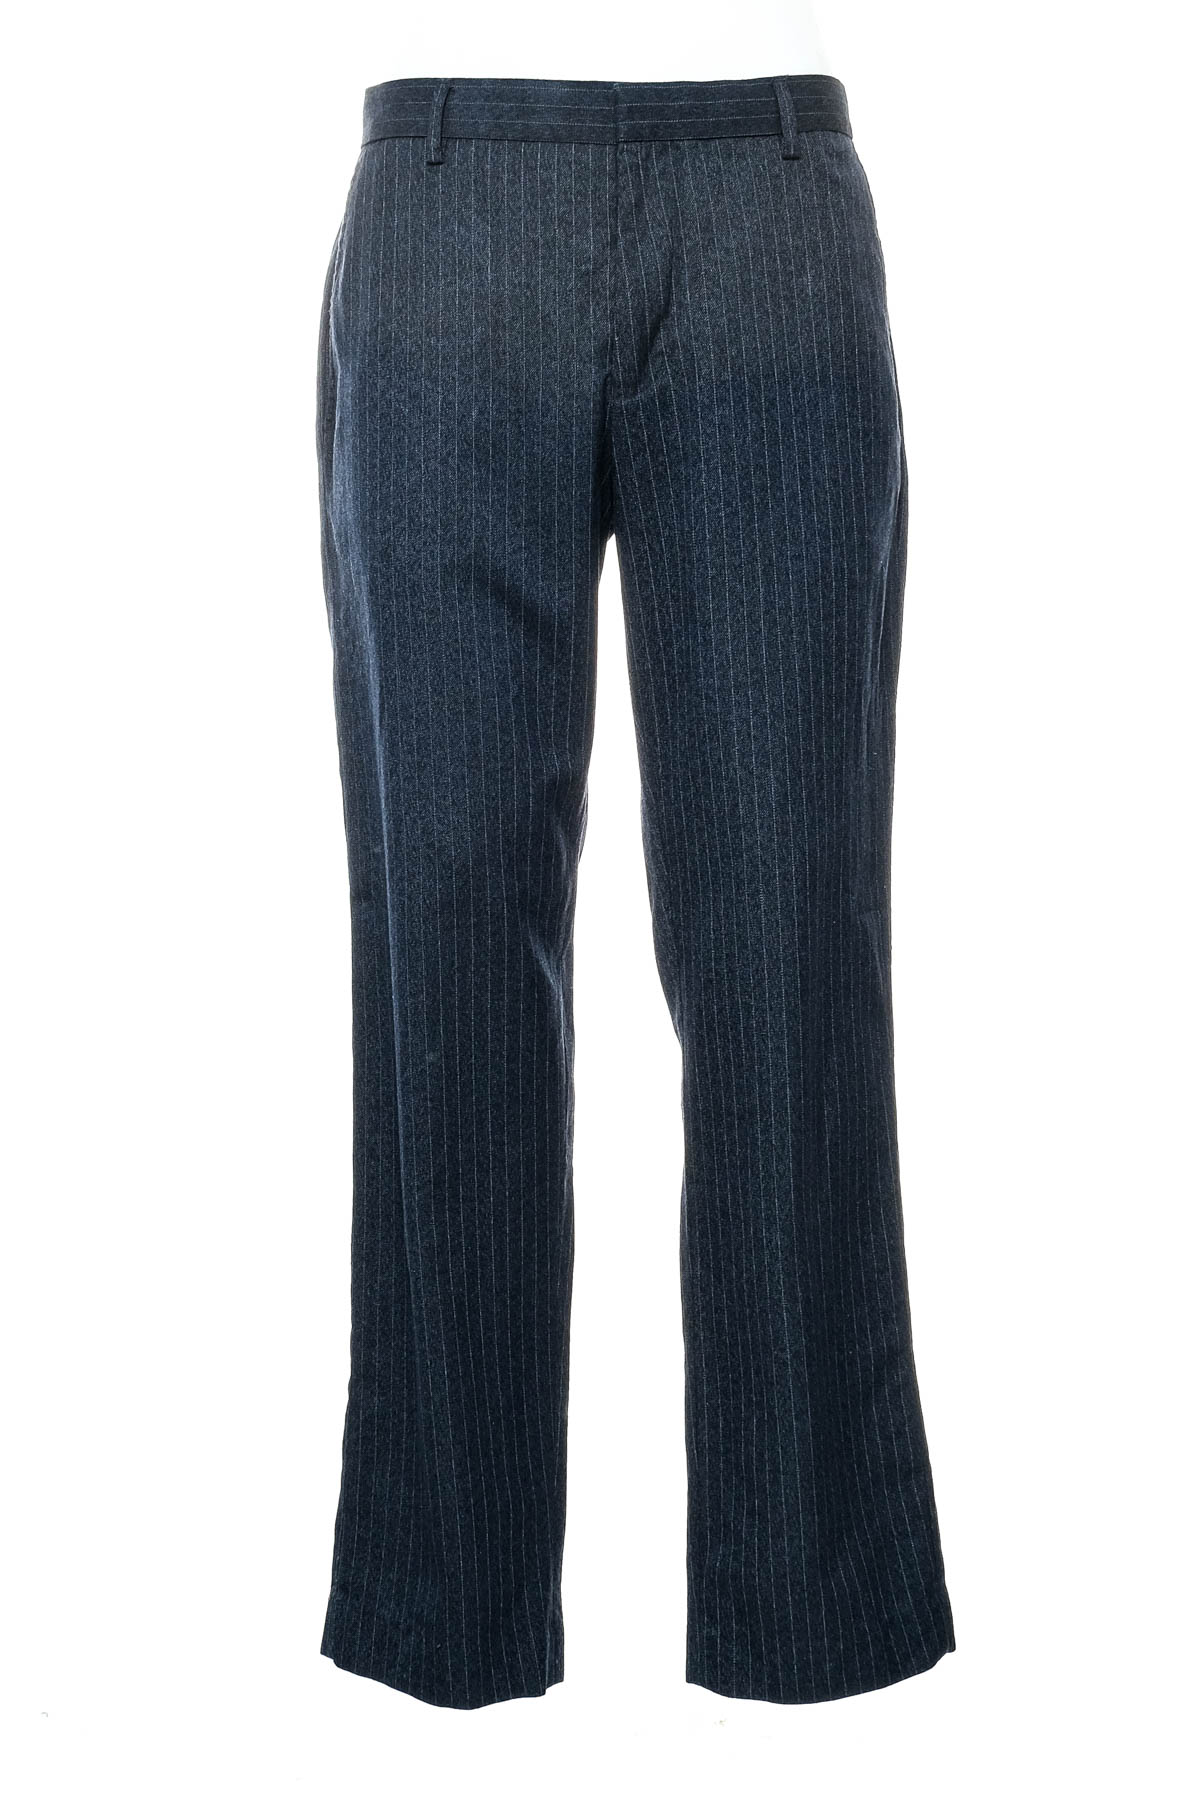 Men's trousers - Burton - 0